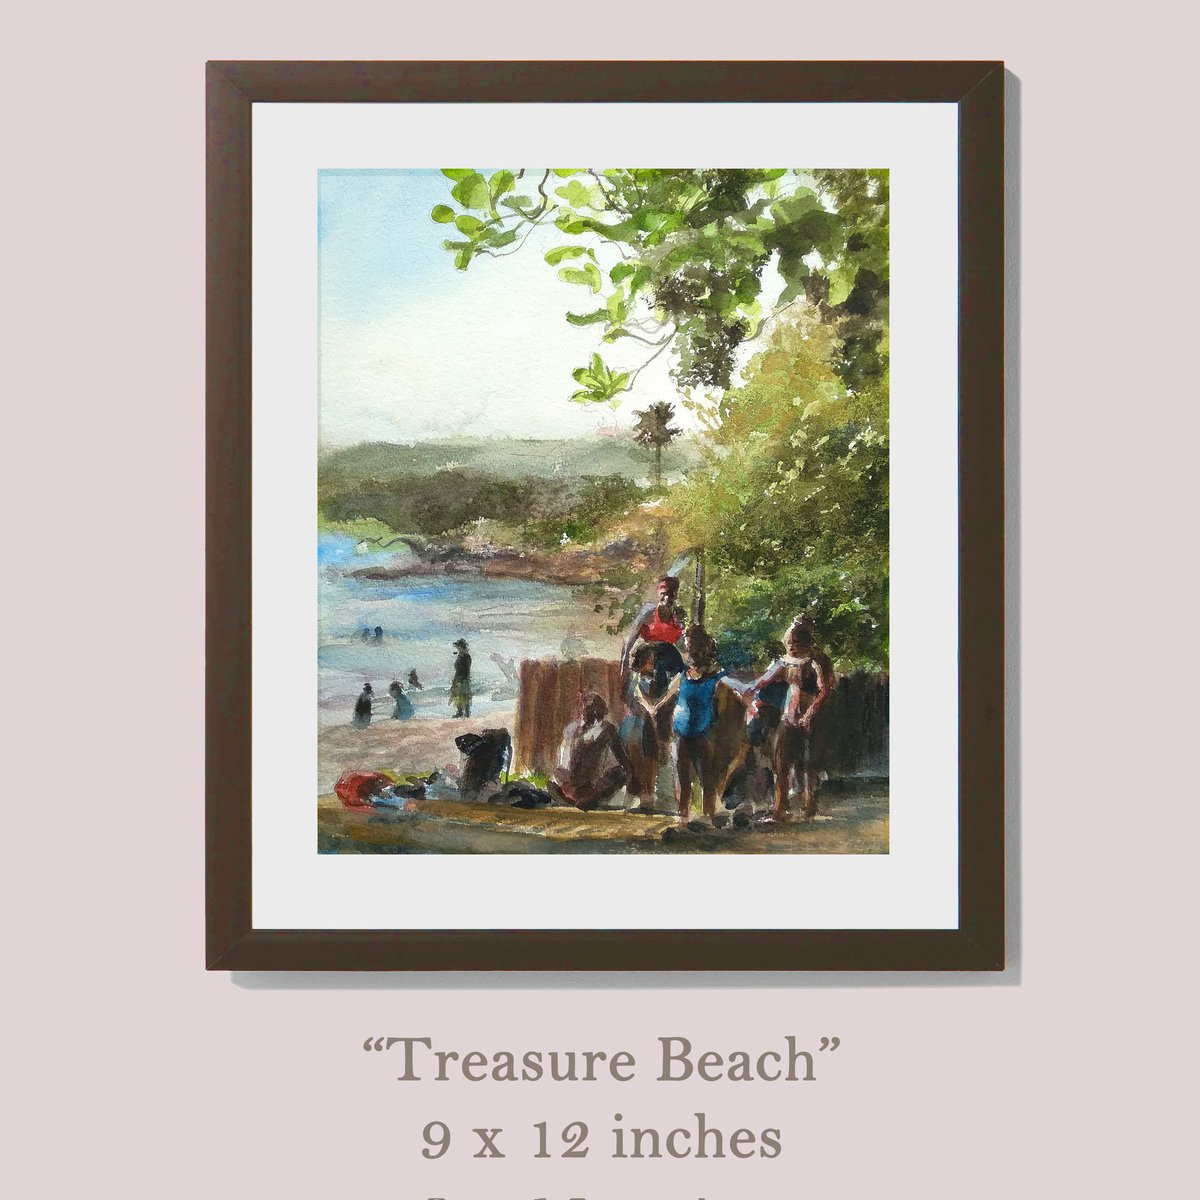 'Treasure Beach' #watercolor on paper

#jamaica #jamaicanart #painting #fineart #beach #Caribbean #saintelizabeth #treasurebeach